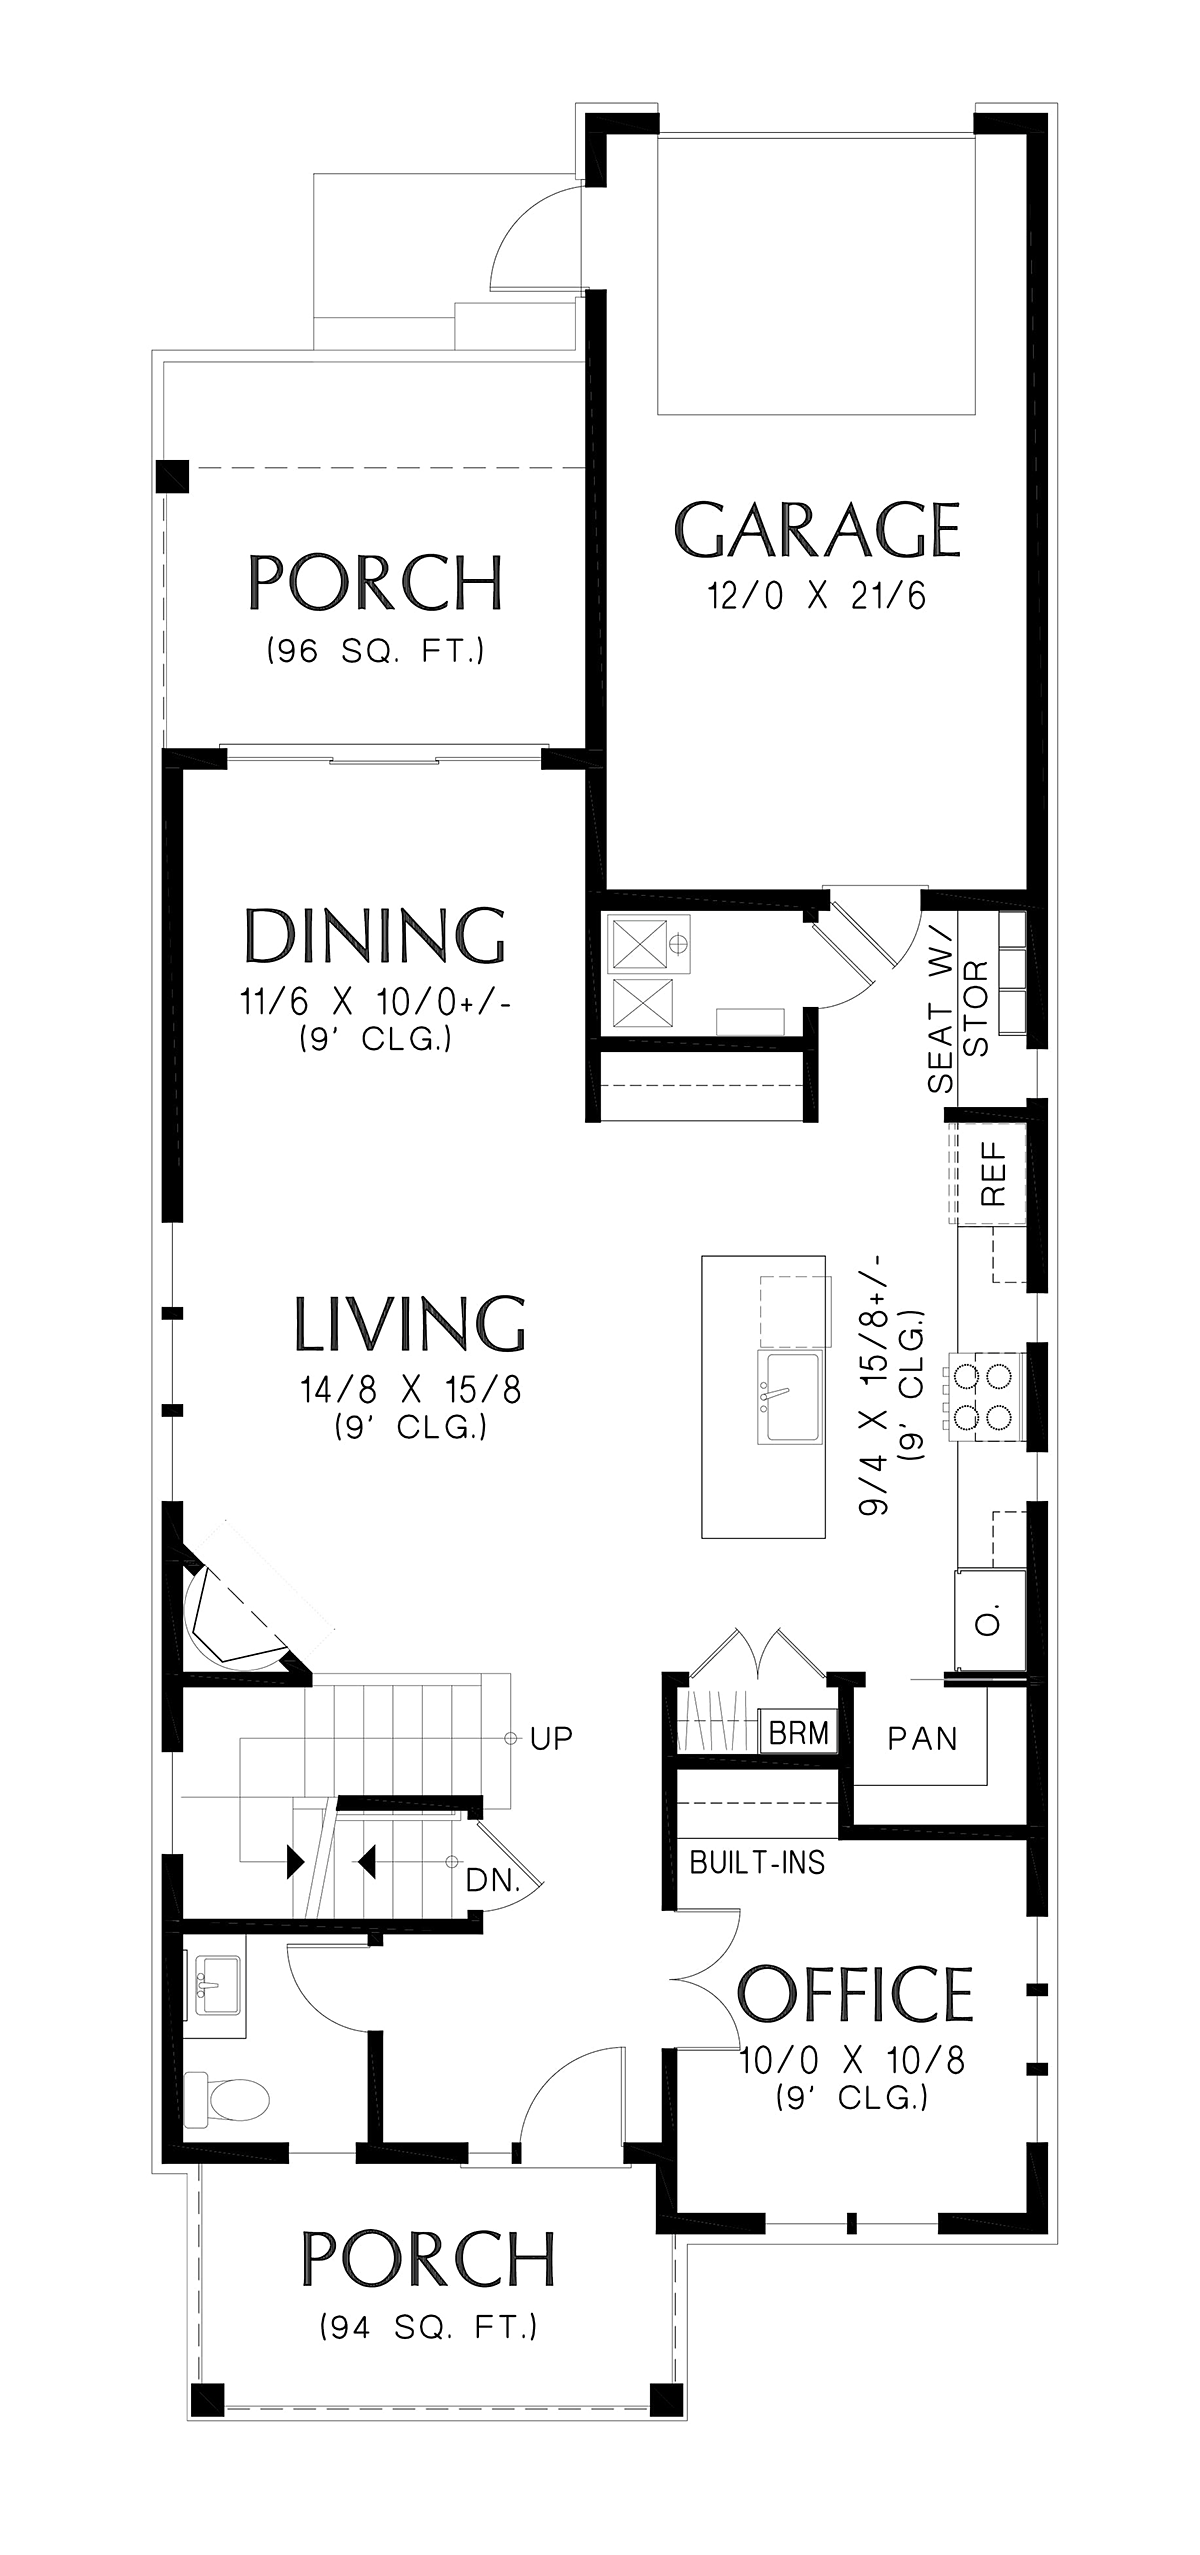 House Plan 83502 Alternate Level One